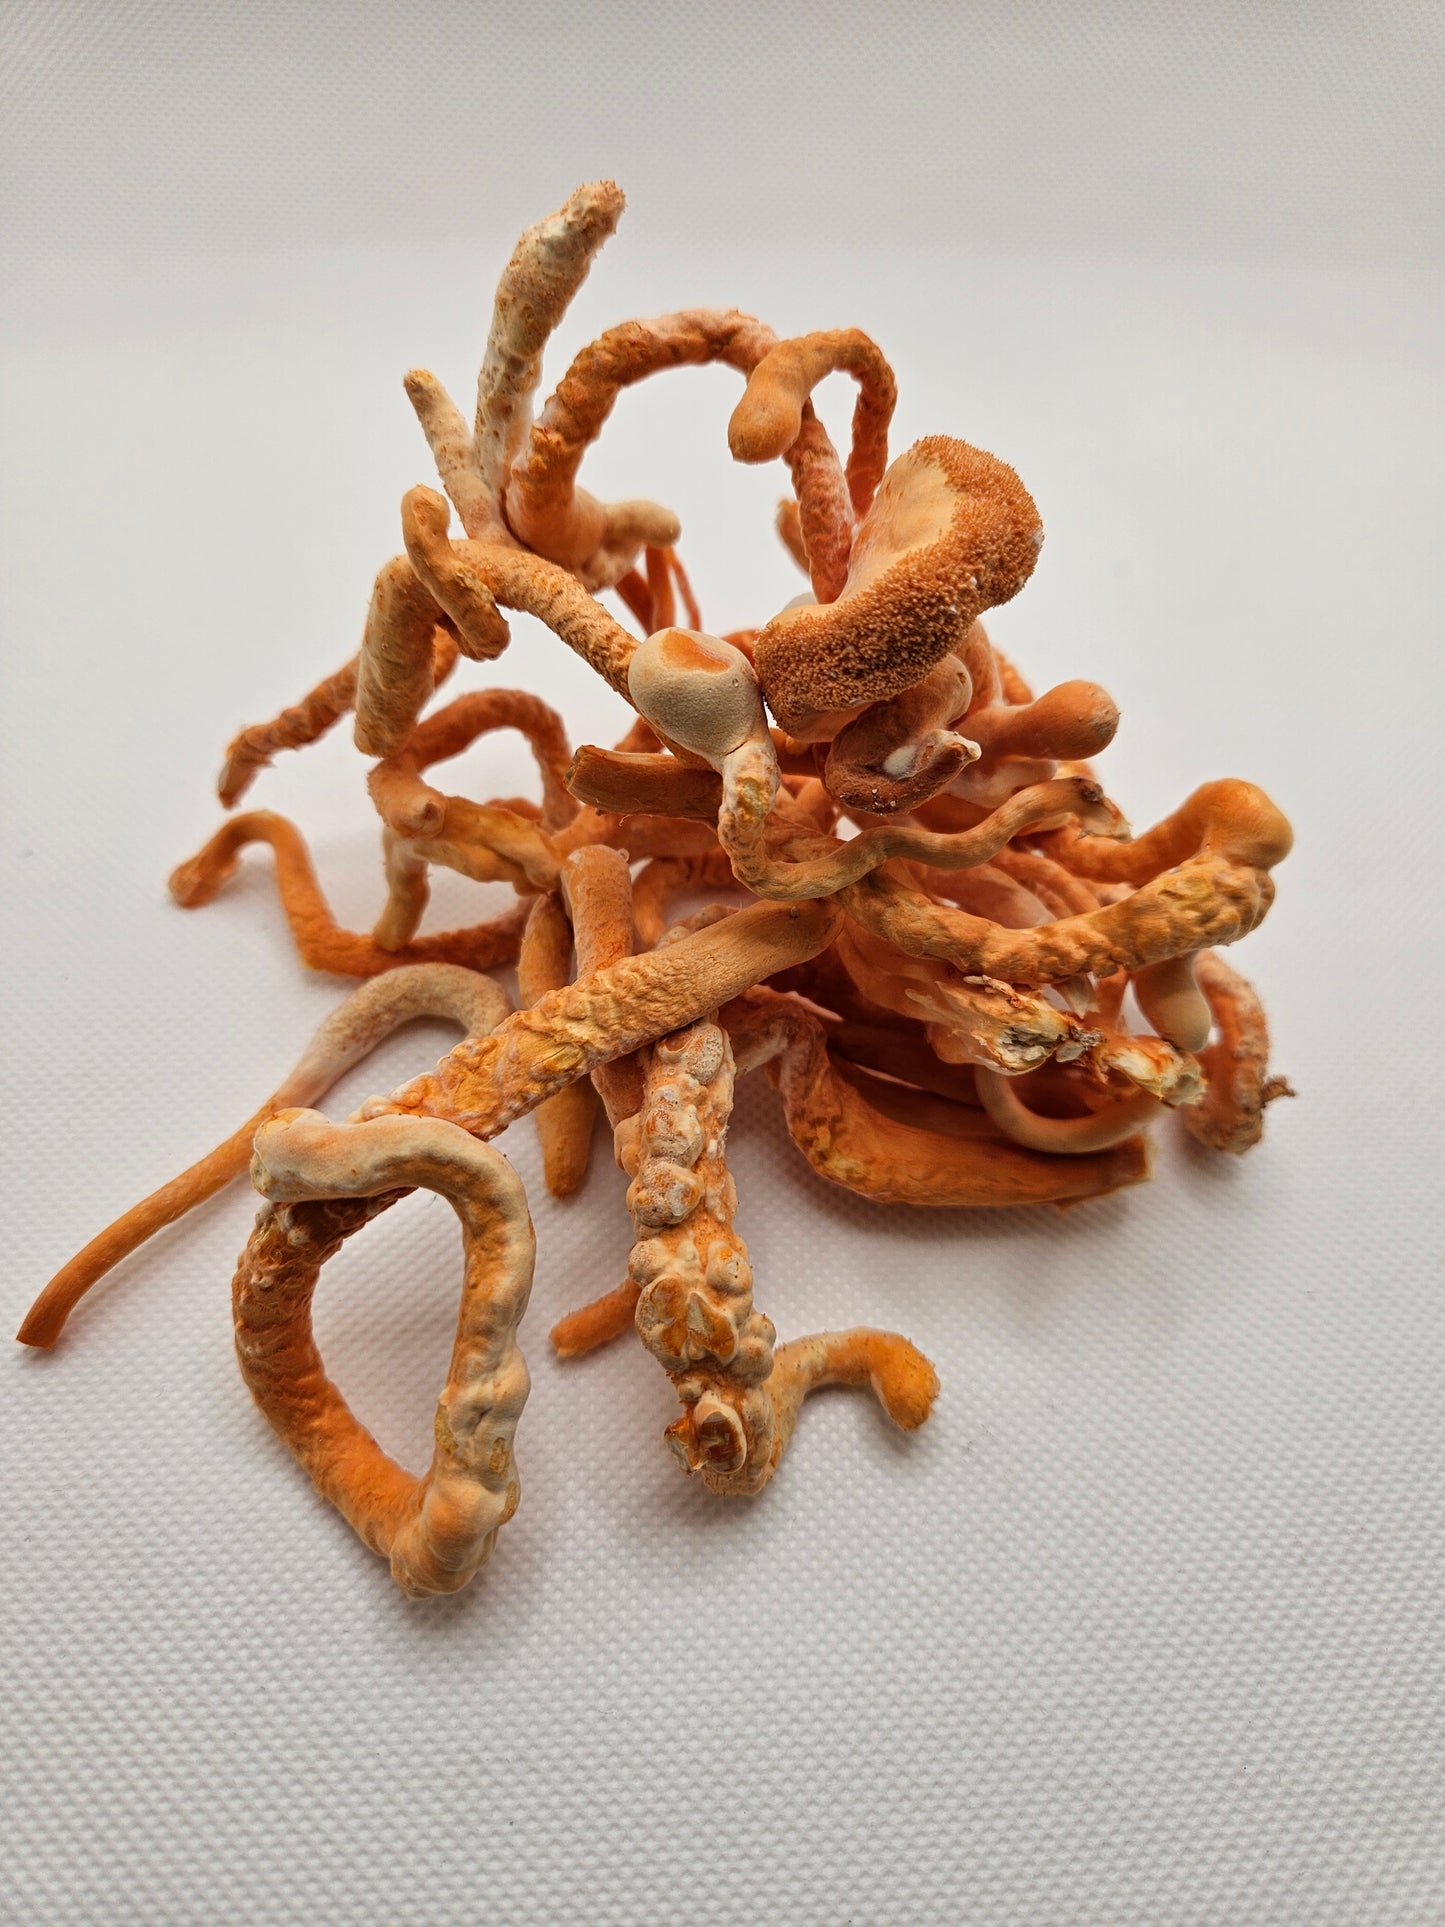 Cordyceps Mushrooms in a pile bright and orange